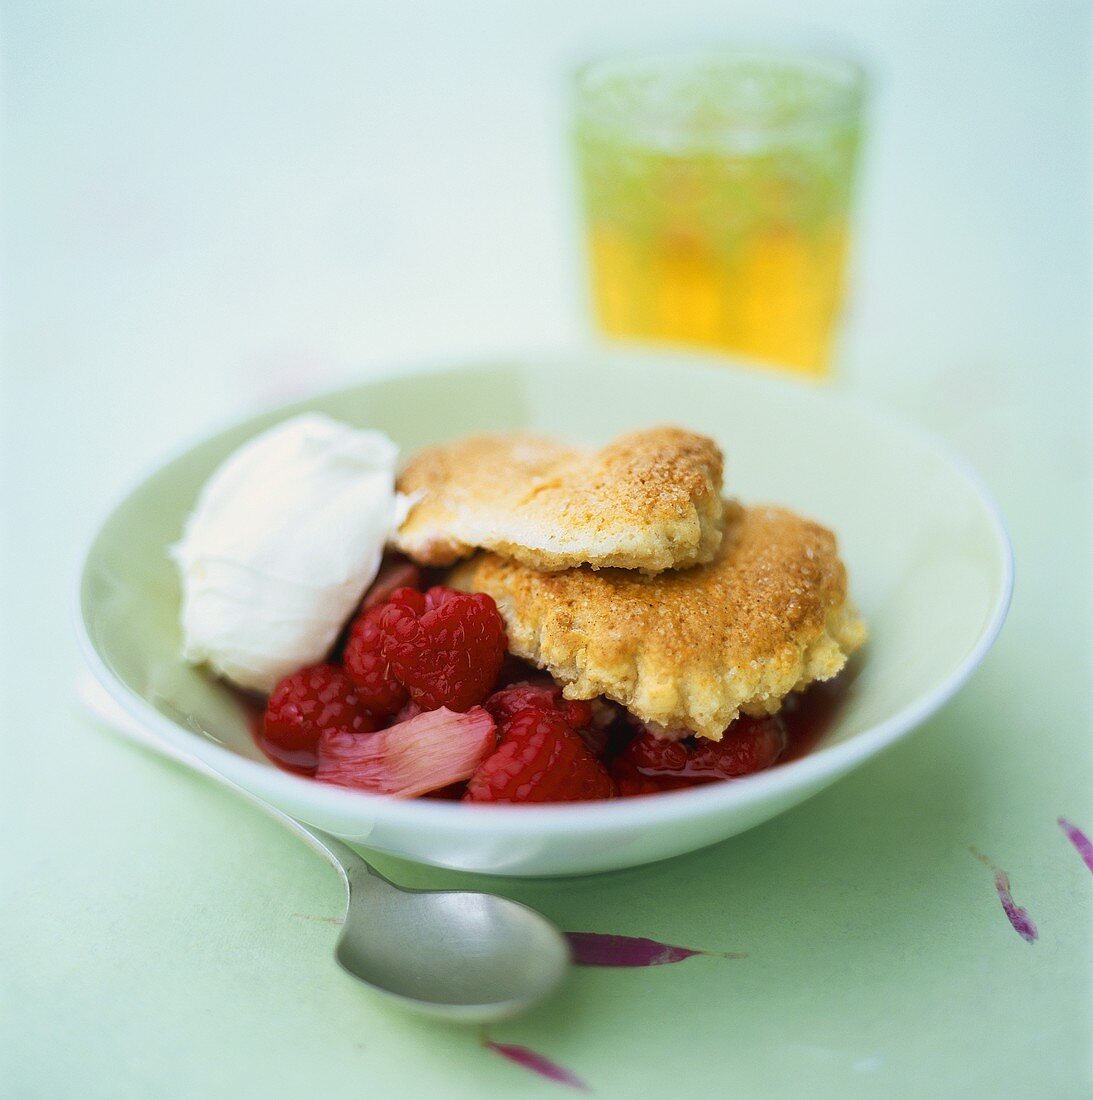 Raspberry & rhubarb compote with cinnamon pancakes & cream